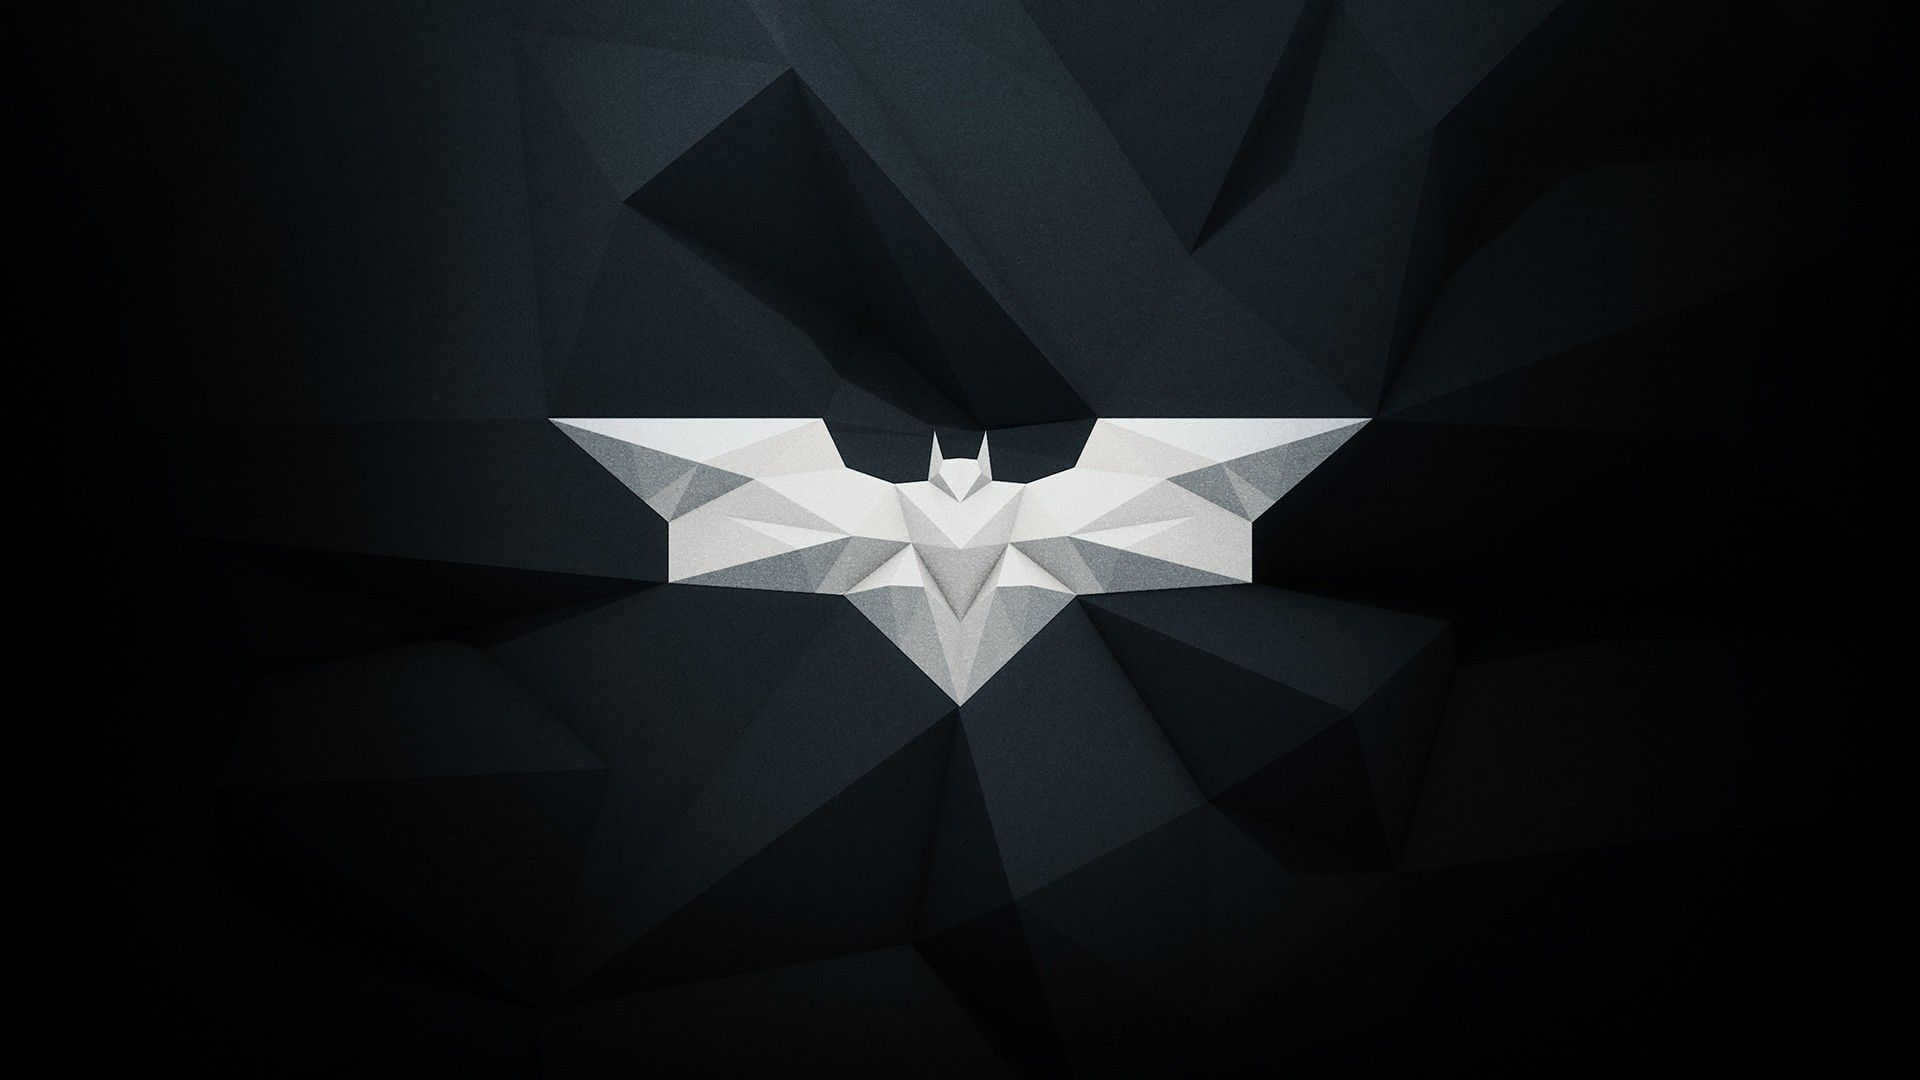 Batman Logo Graphic Design, HD Artist, 4k Wallpaper, Image, Background, Photo and Picture